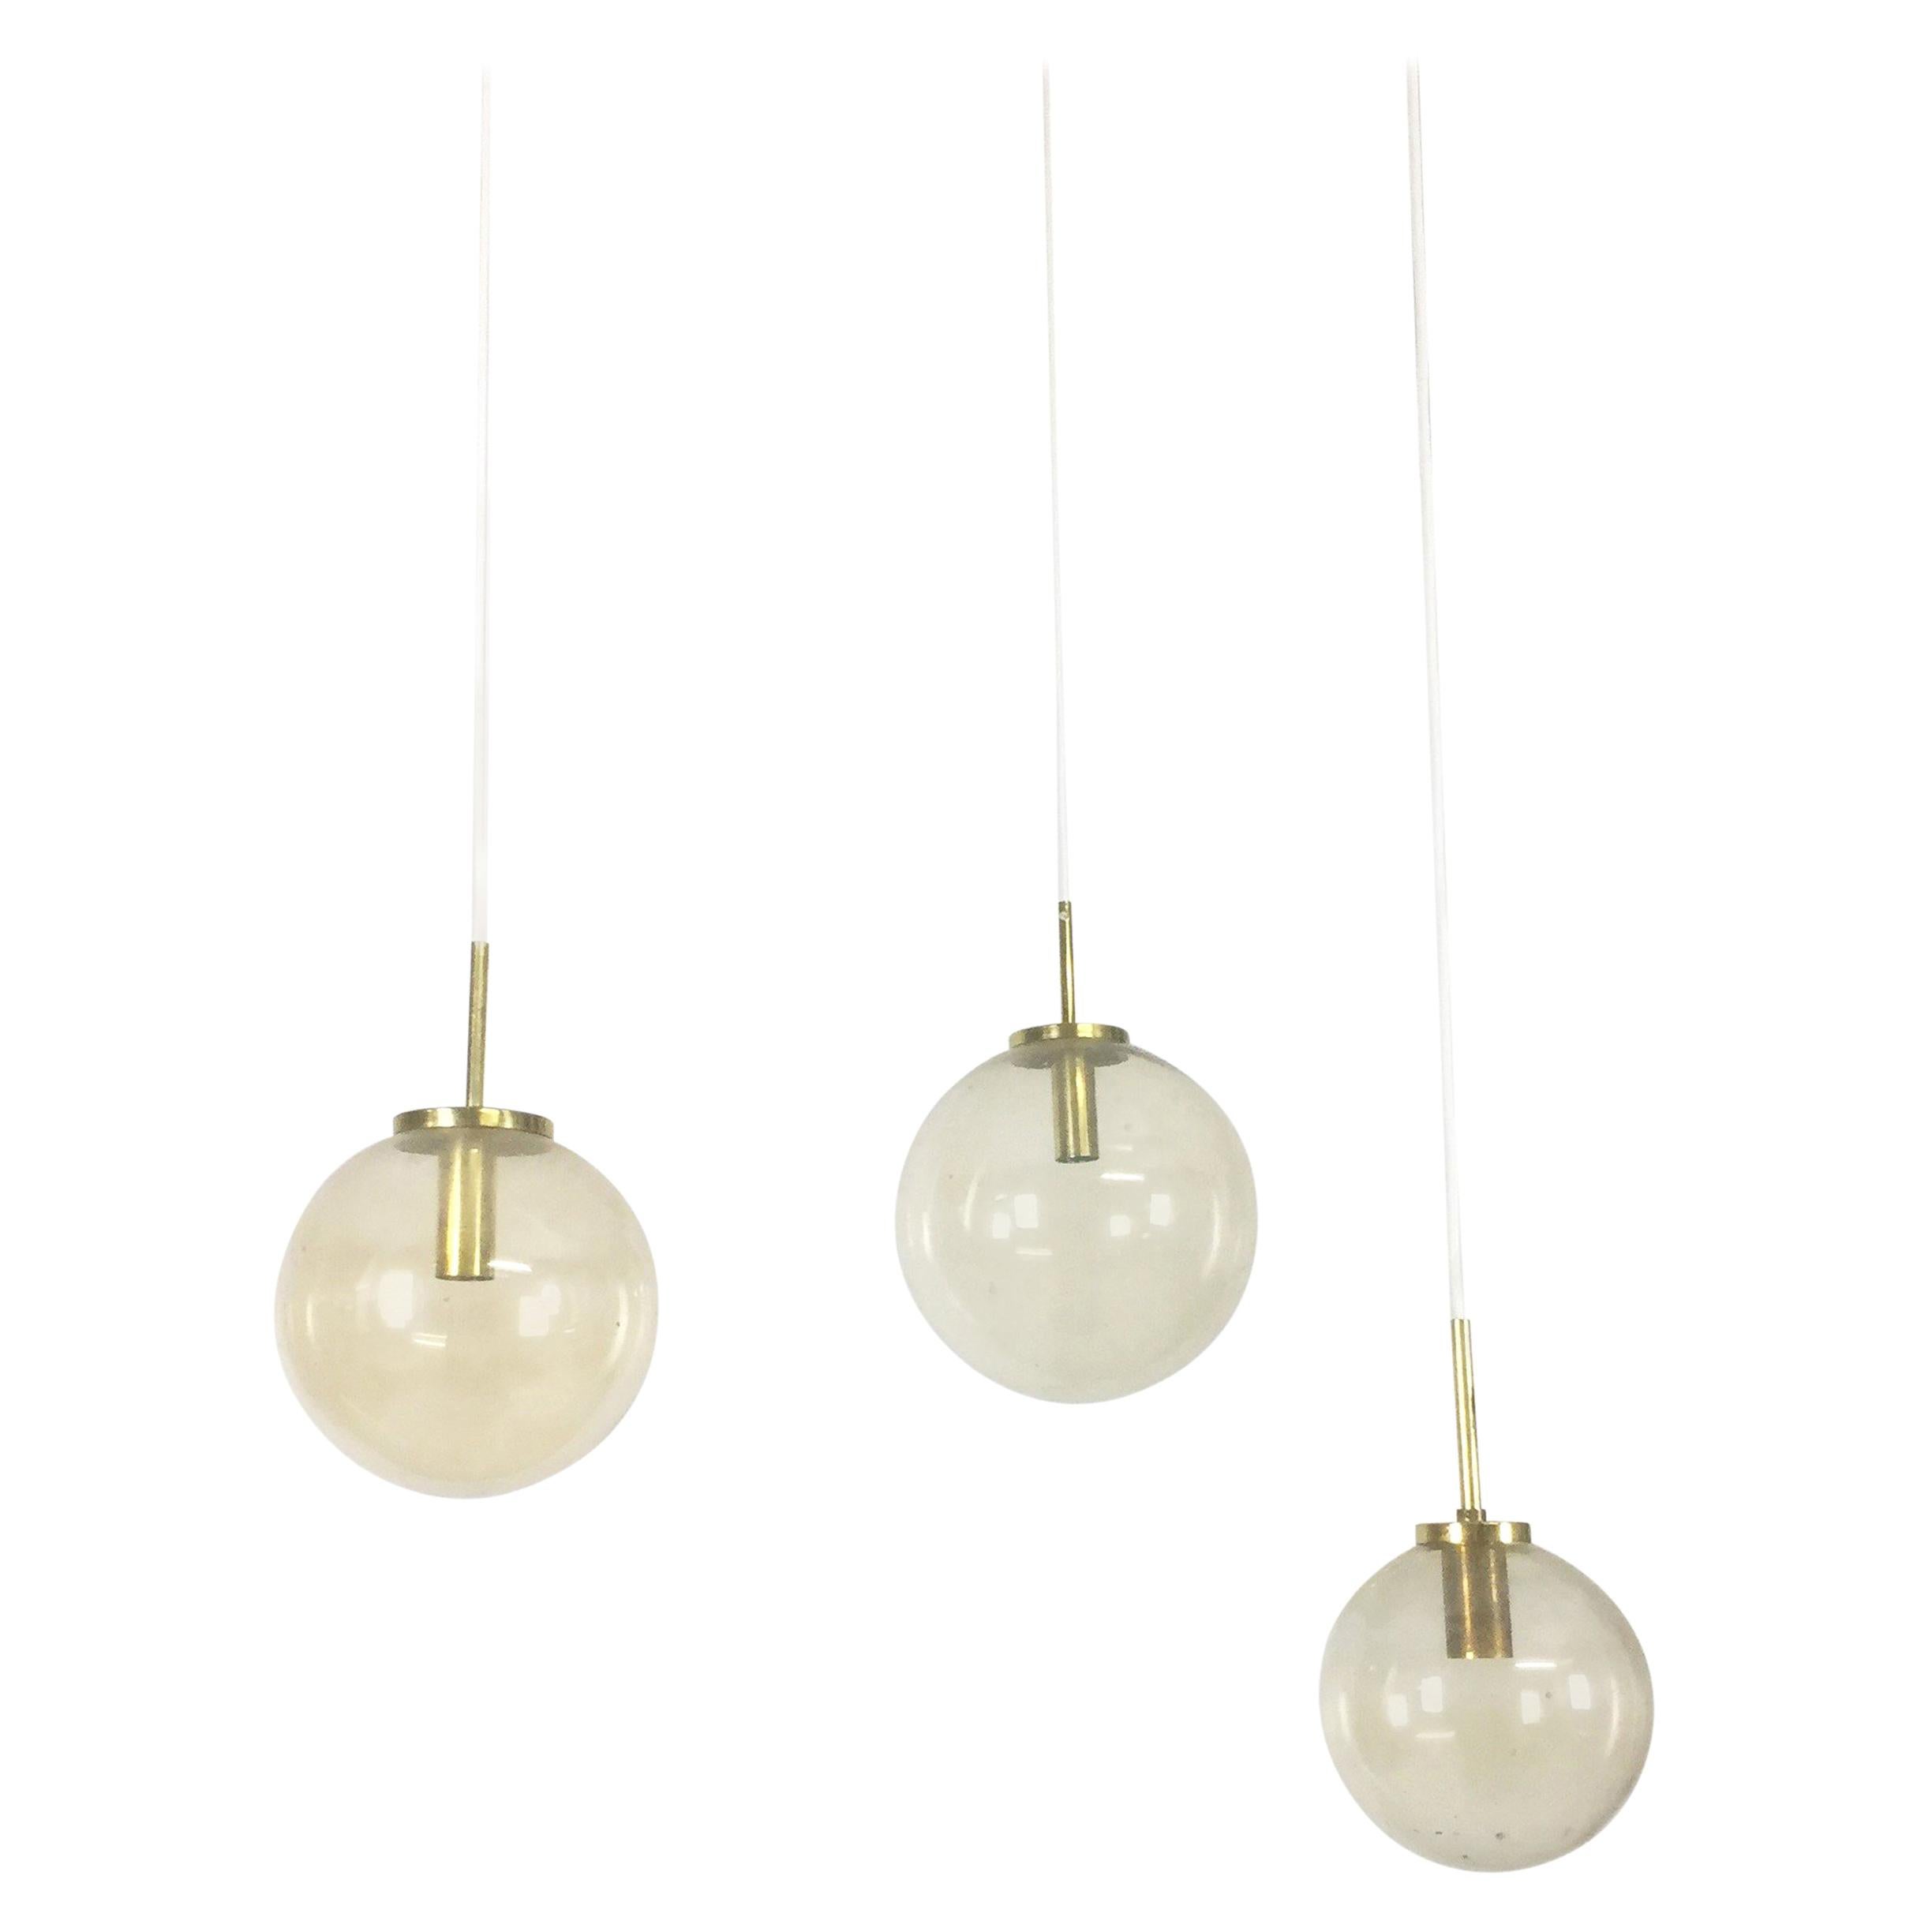 Set of Three Original German Ball Glass Hanging Light, Glashütte Limburg Germany For Sale